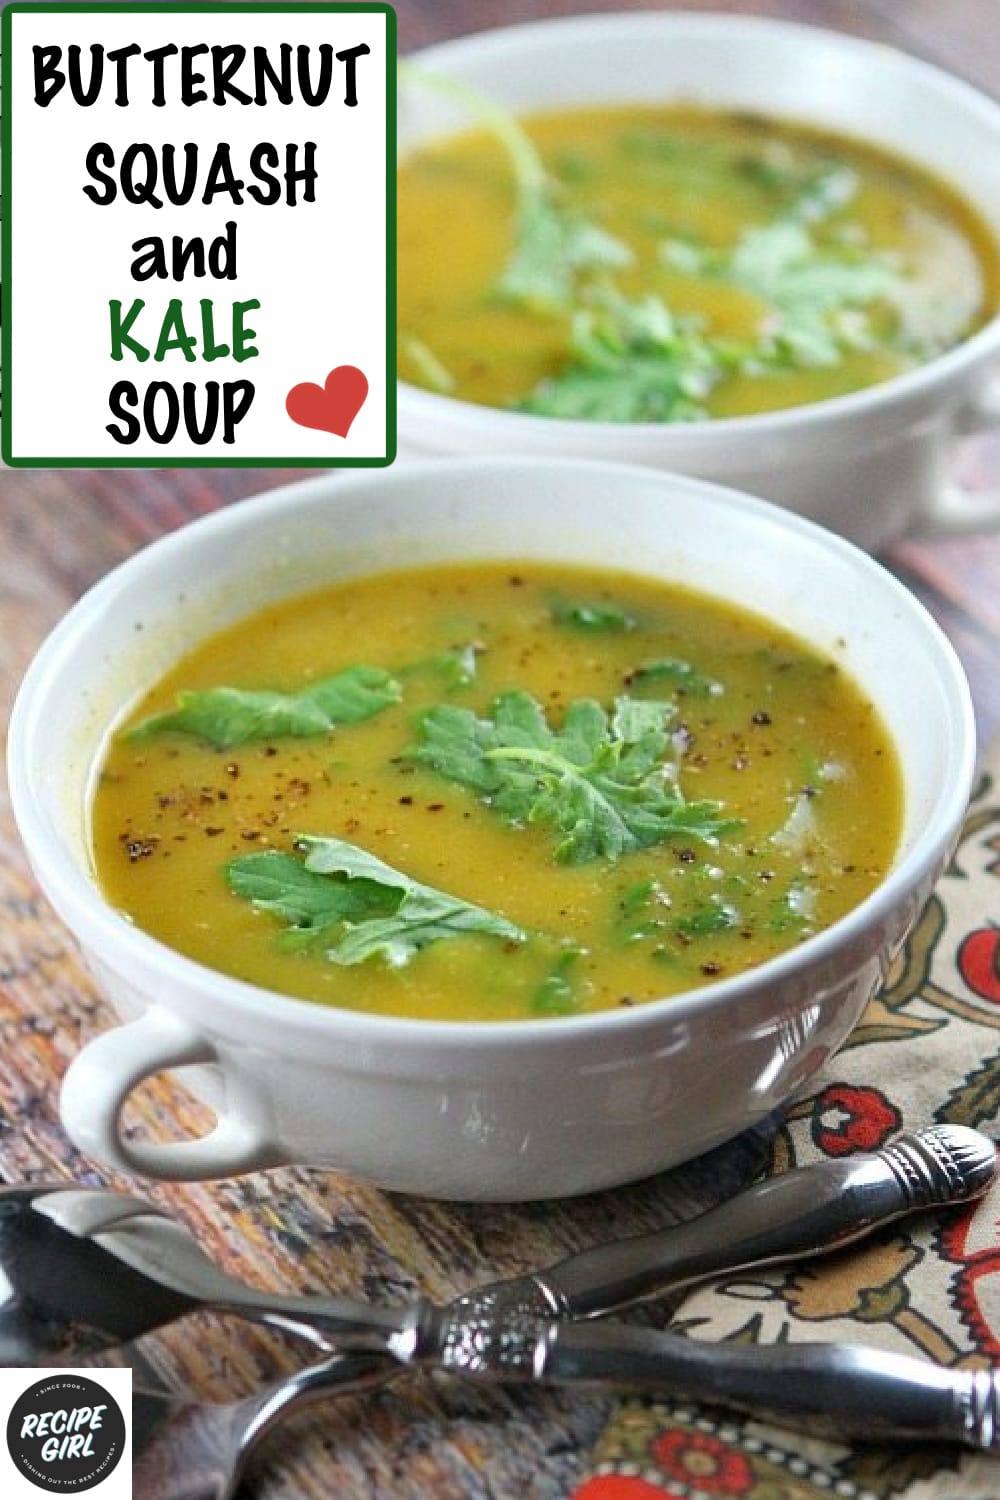 Butternut Squash Soup with Kale - Recipe Girl